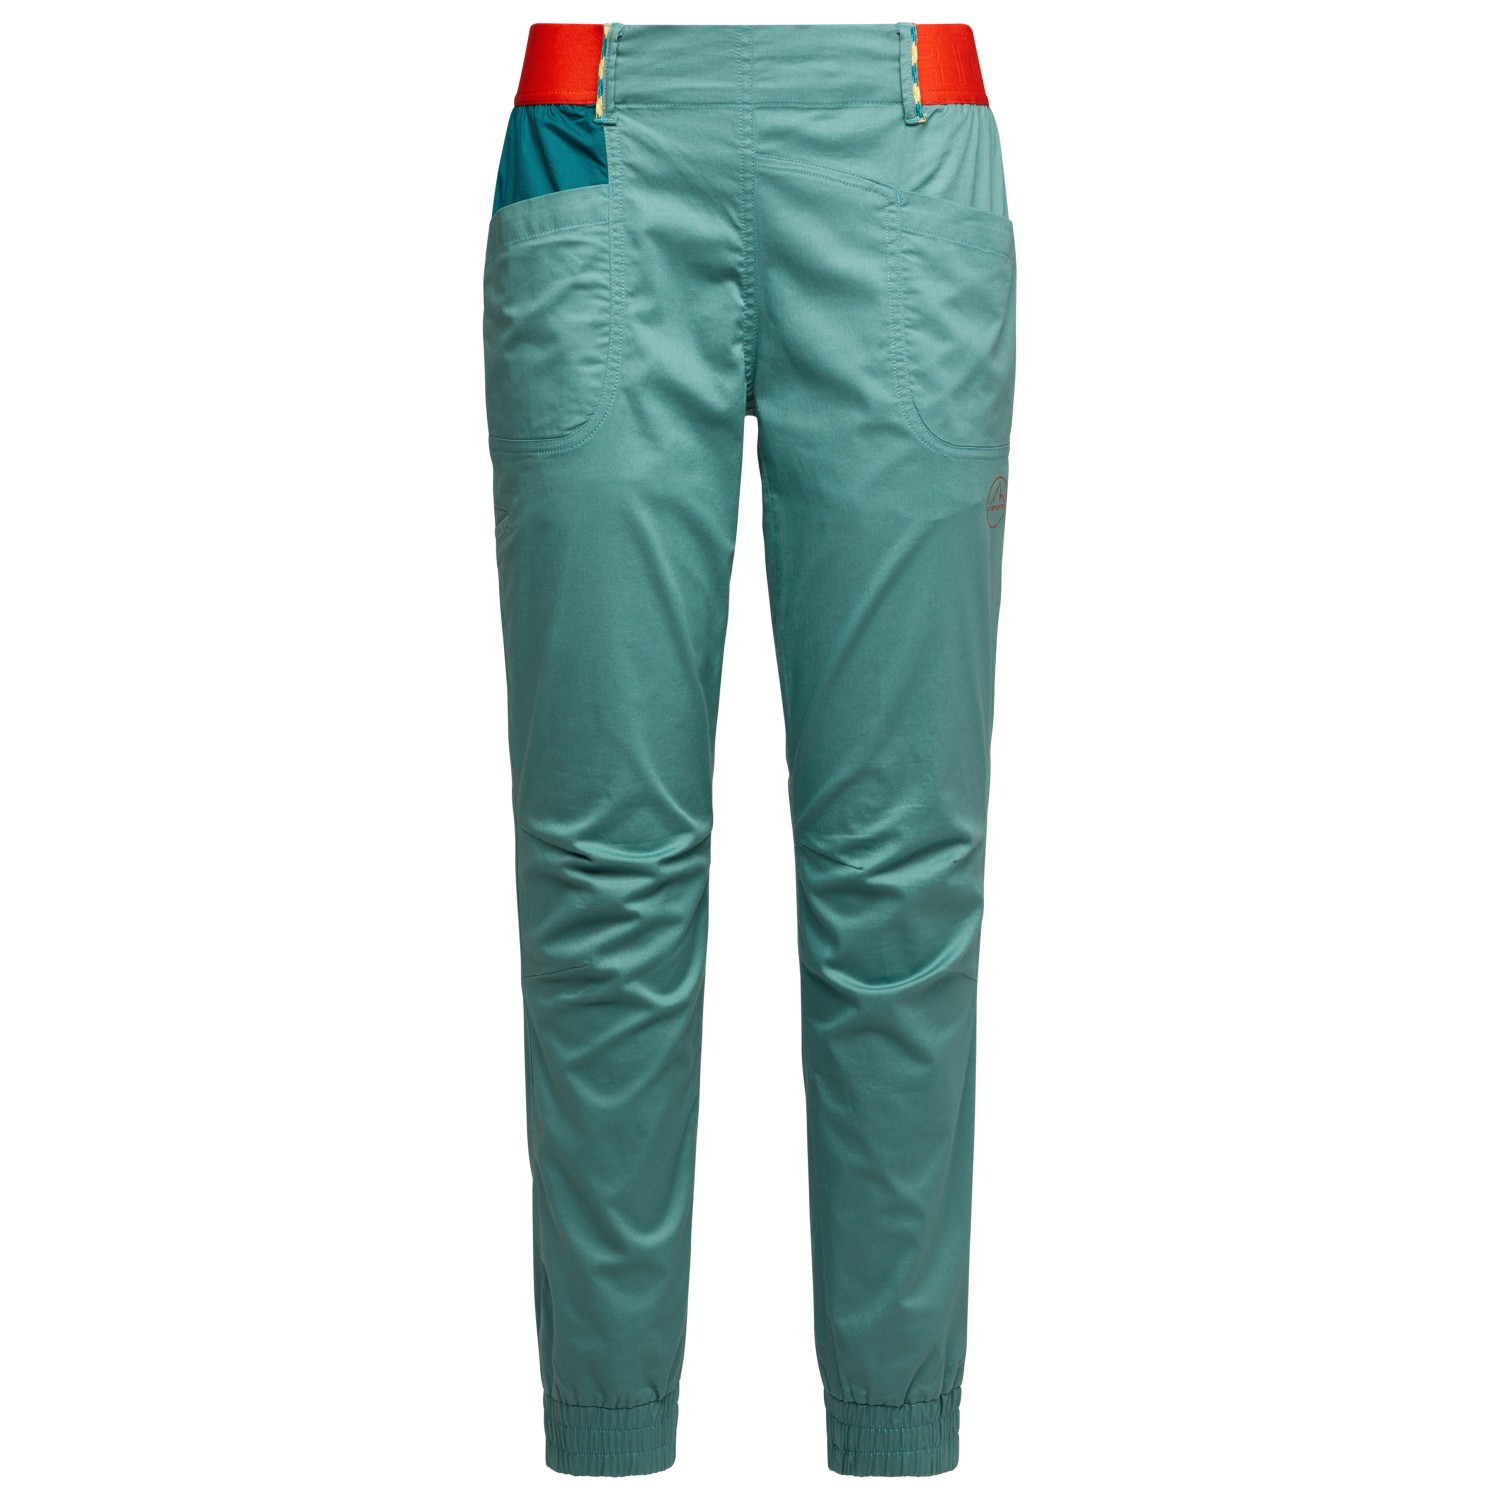 Альпинистские штаны La Sportiva Women's Tundra Pant, цвет Juniper/Everglade